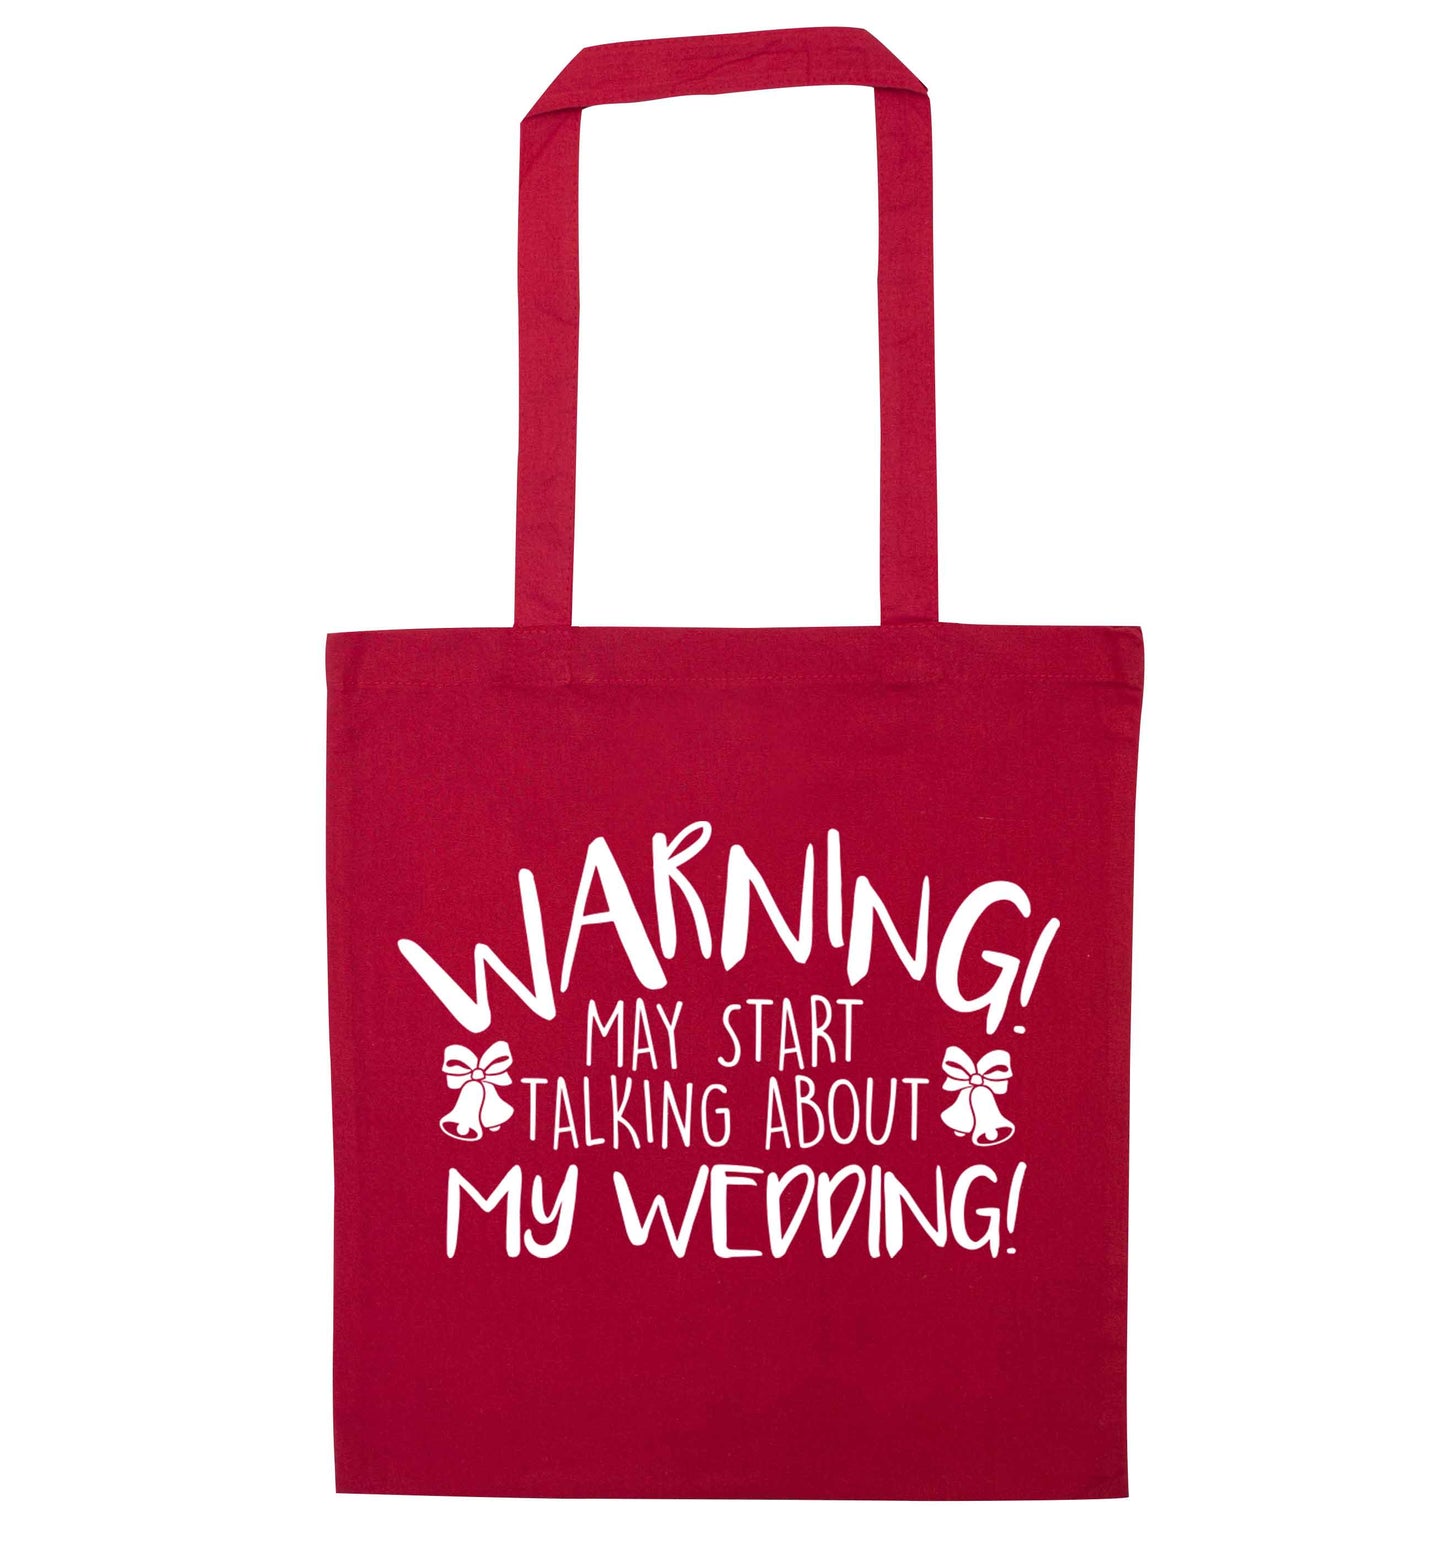 Warning may start talking about my wedding! red tote bag